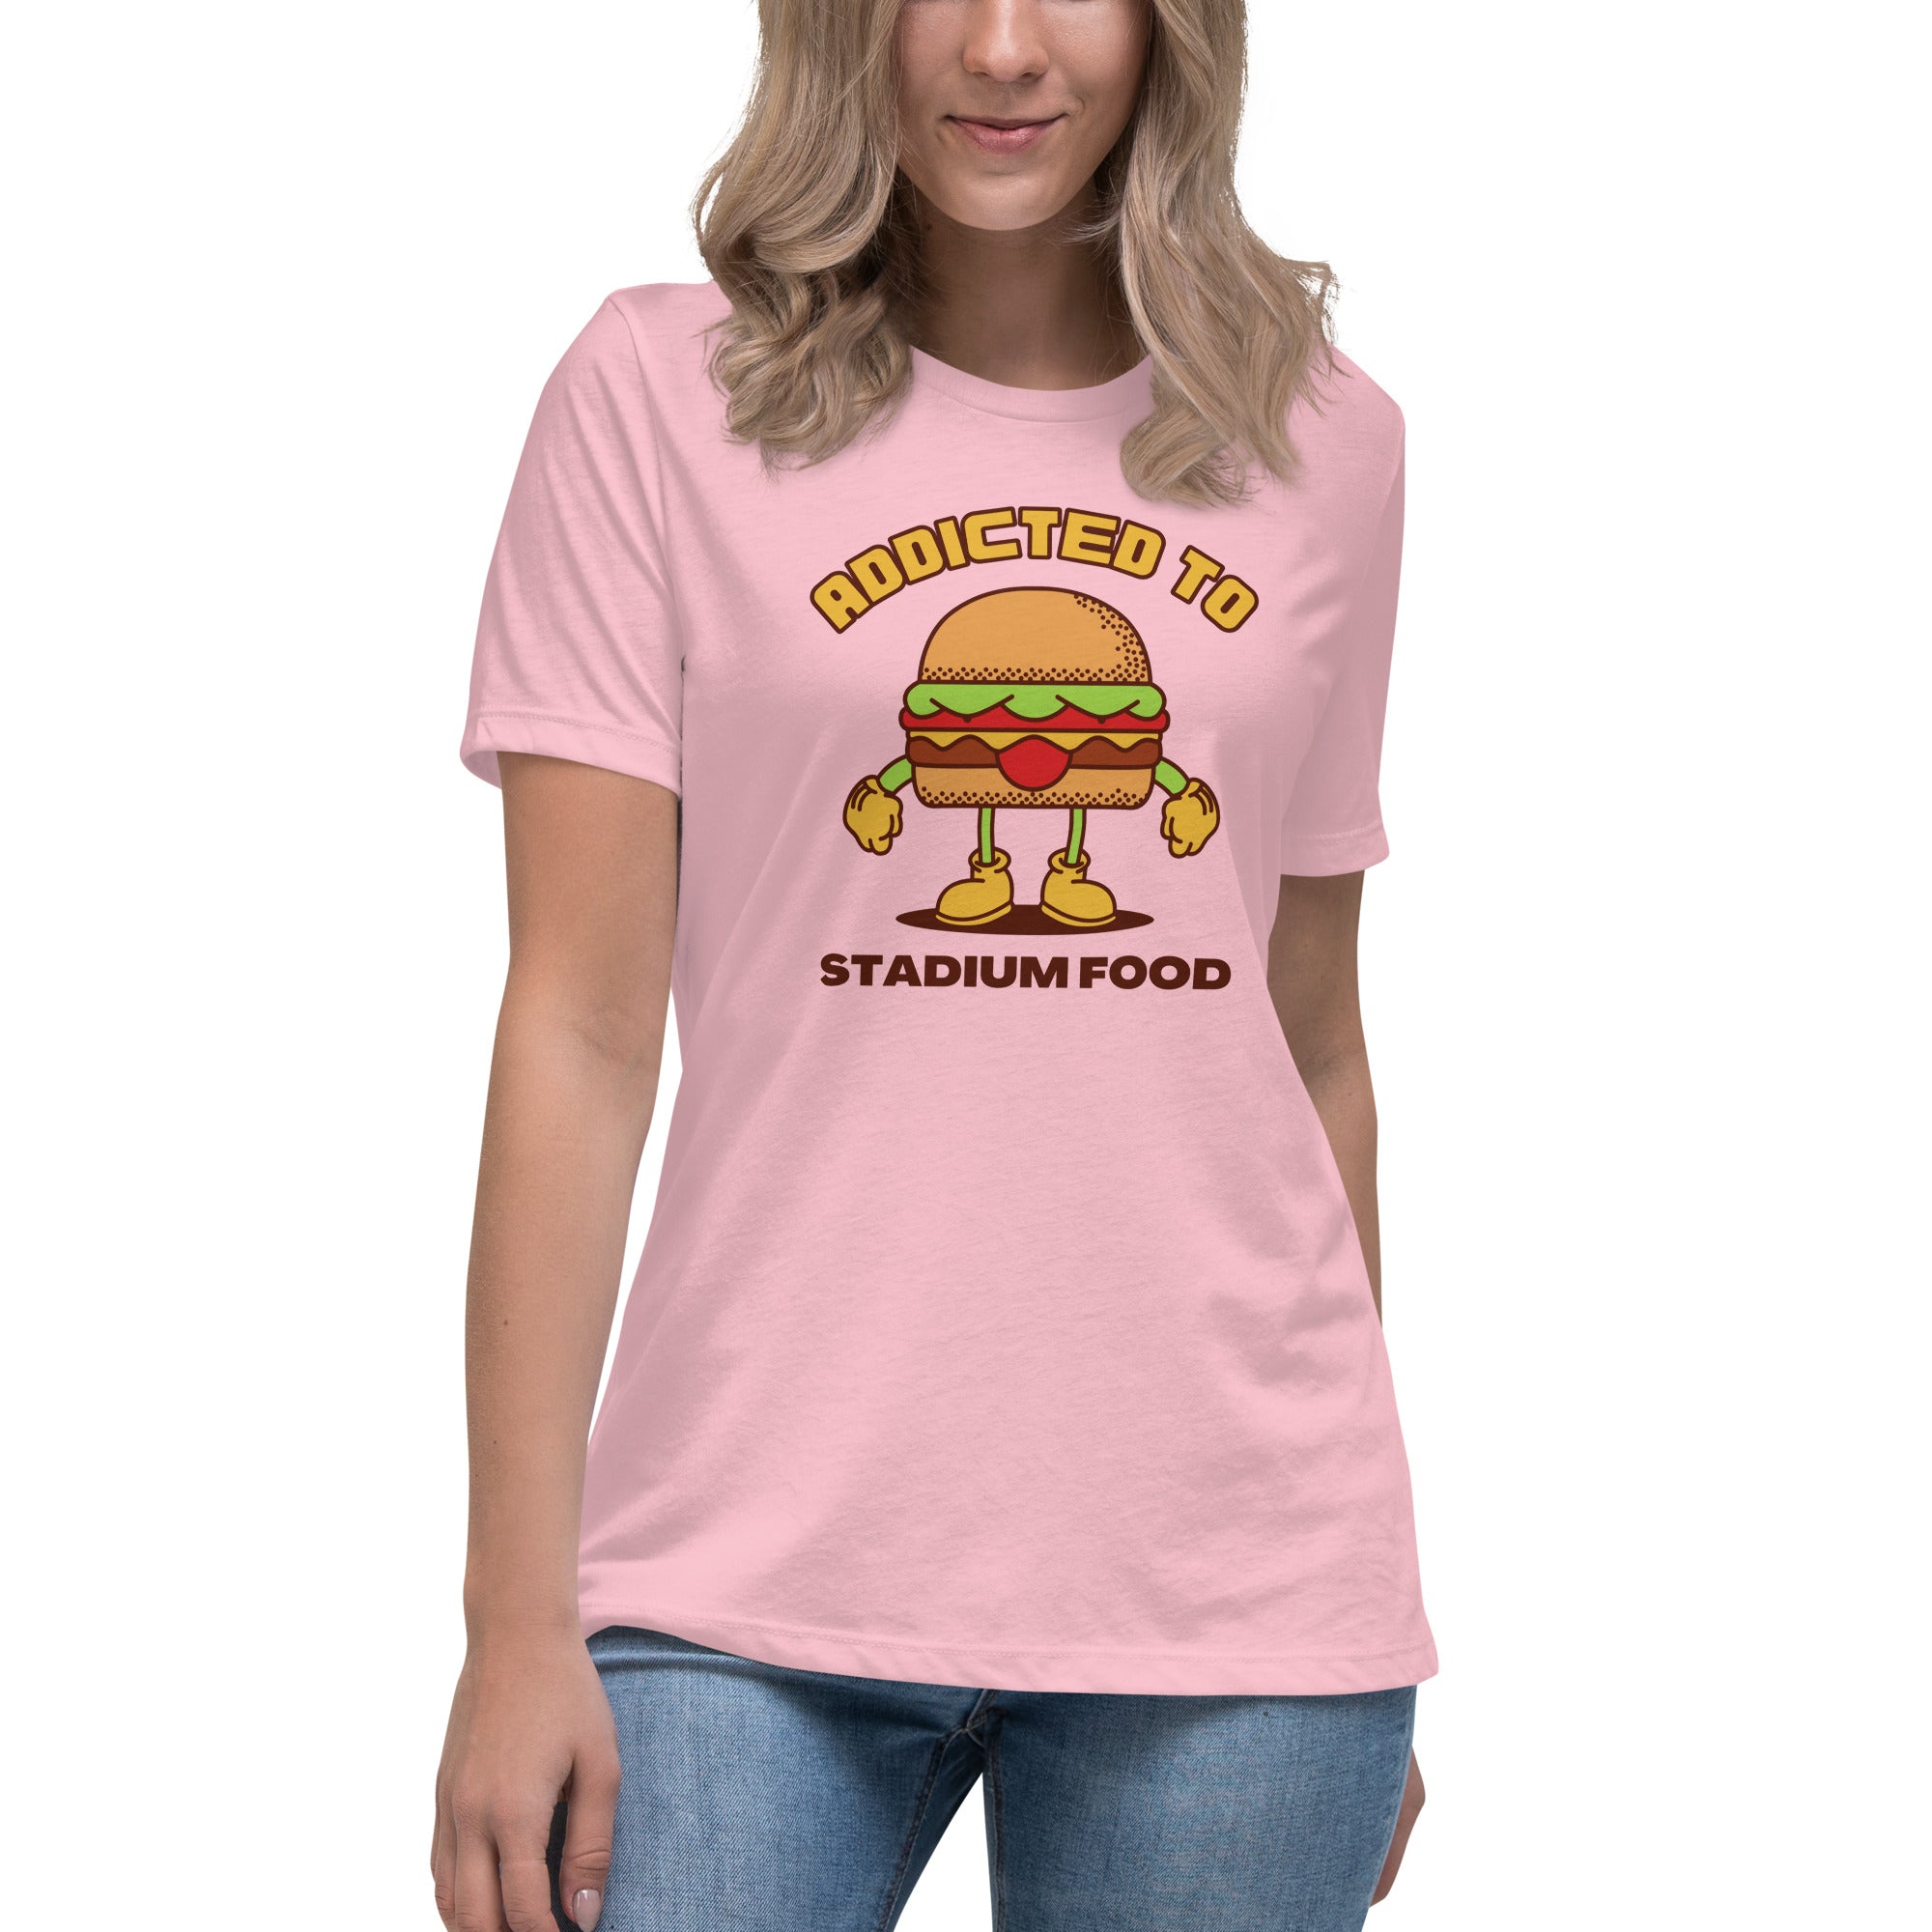 Addicted To Stadium Food Women's Premium T-Shirt